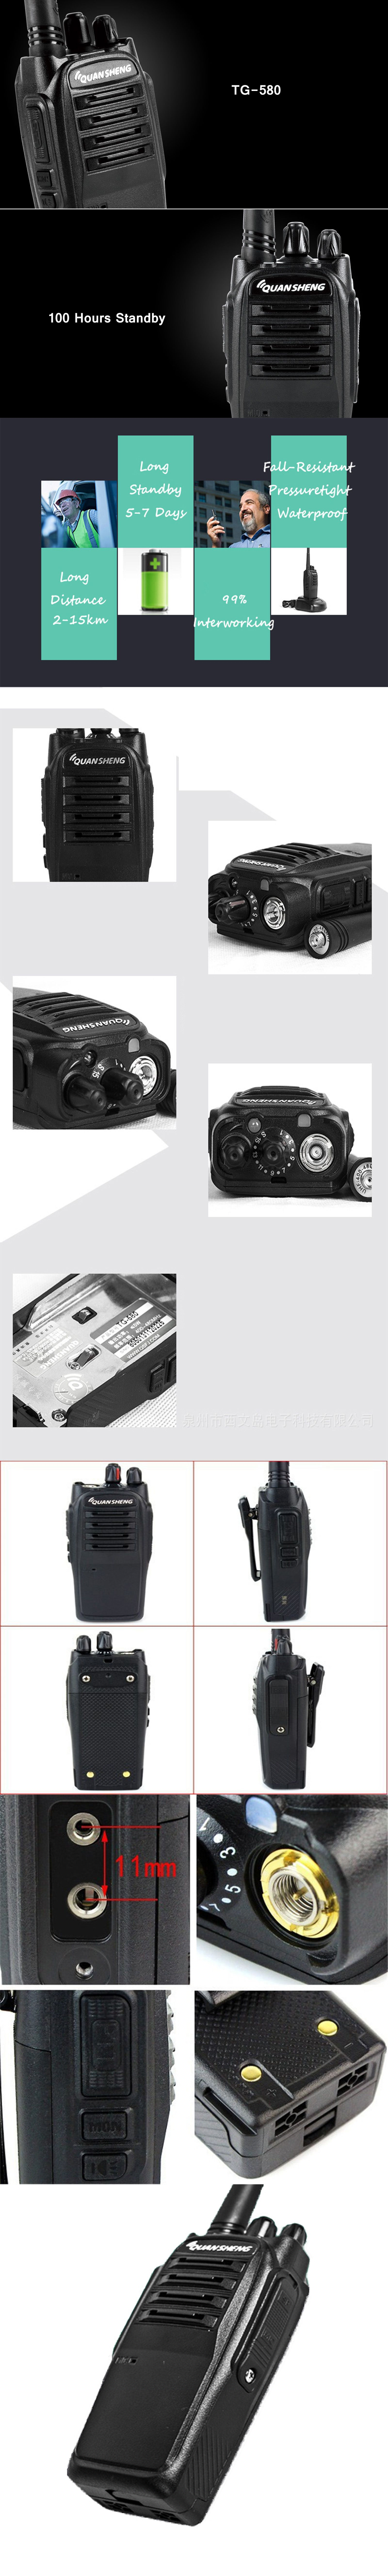 QUANSHENG-TG-580-16-Channels-400-480MHz-Mini-Ultra-Light-Two-Way-Dual-Band-Handheld-Radio-Walkie-Tal-1337271